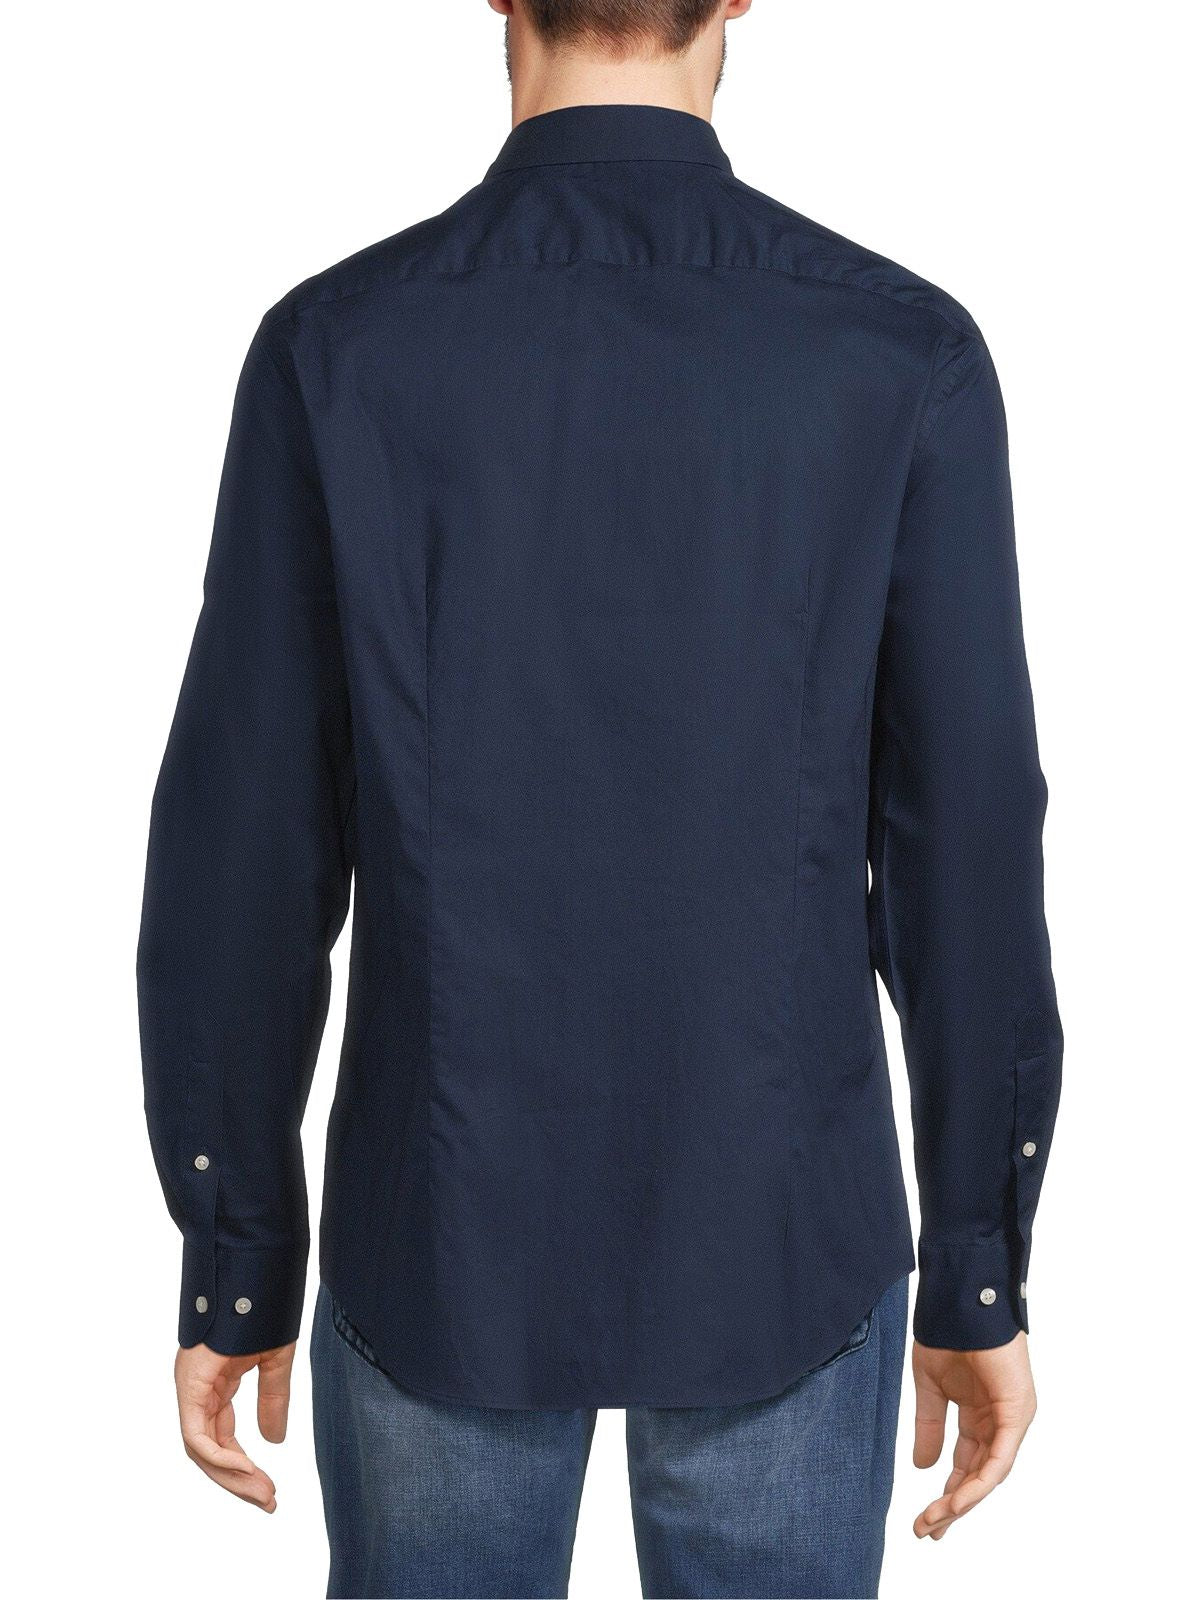 Camicie casual Uomo Tommy Hilfiger - Camicia Slim Fit In Popeline - Blu